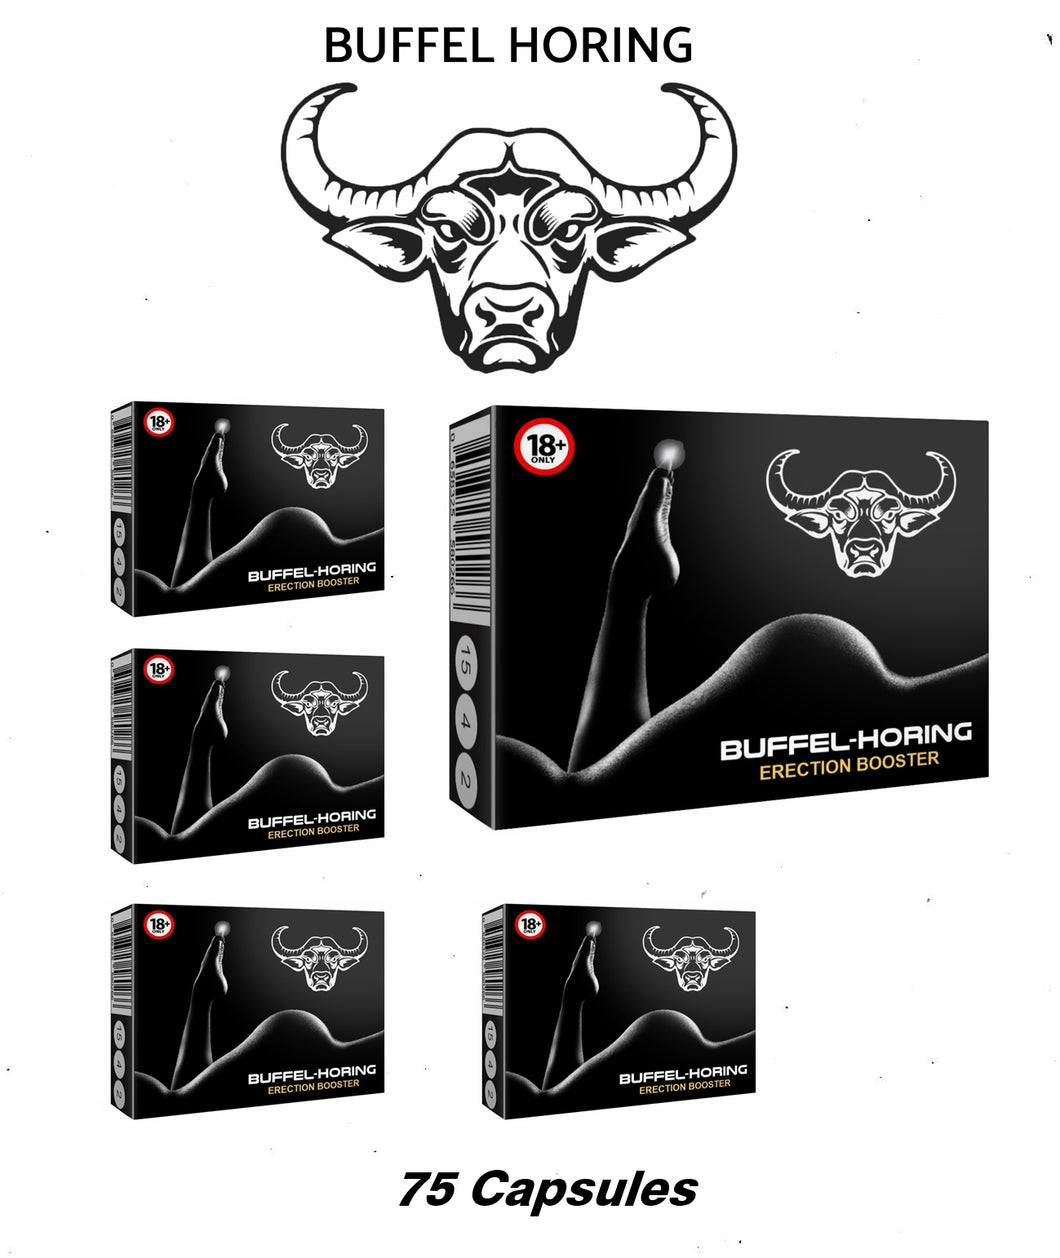 Buffel-Horing (5 Boxes) - 75 Capsules